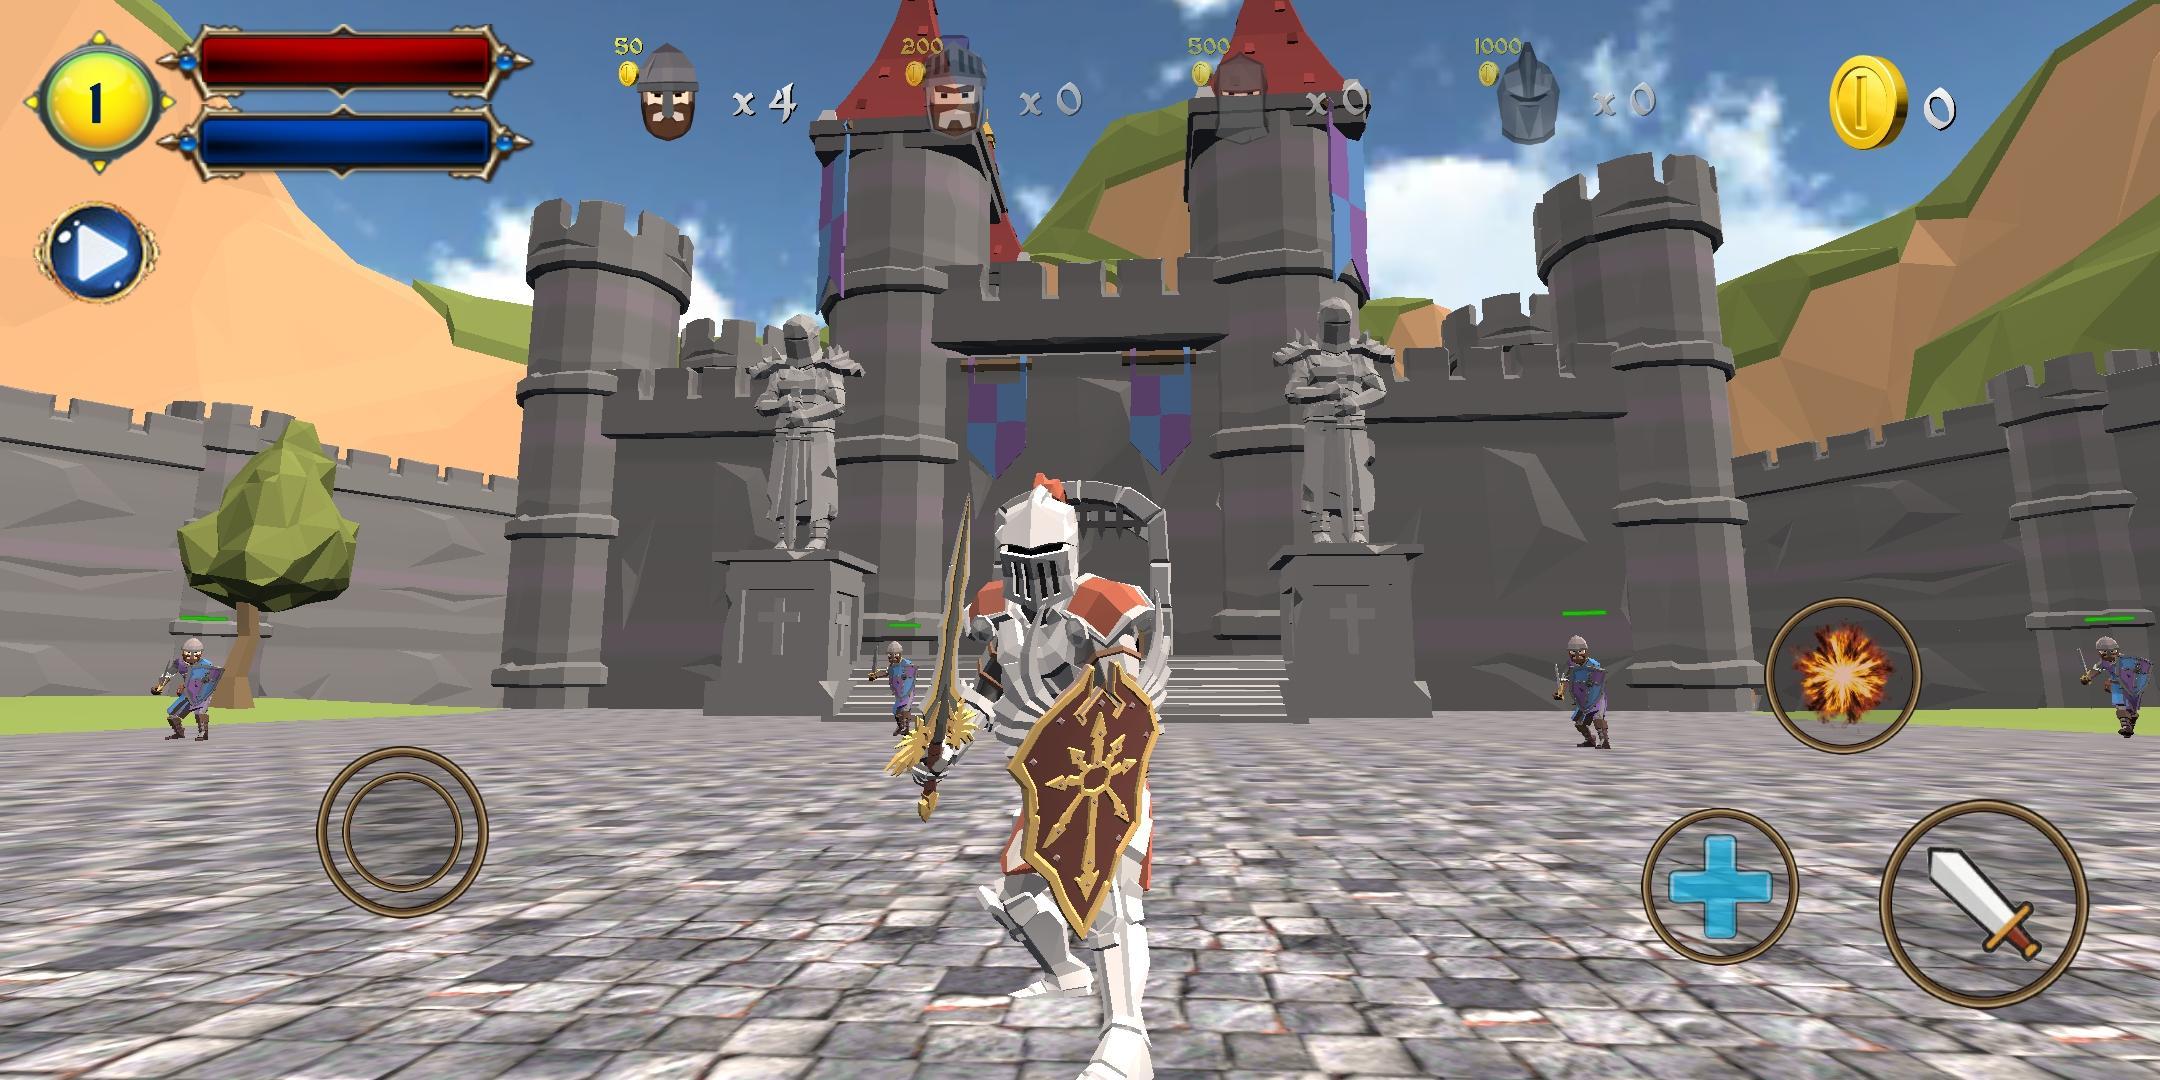 Screenshot 1 of Castle Defense hiệp sĩ chiến đấu 1.6